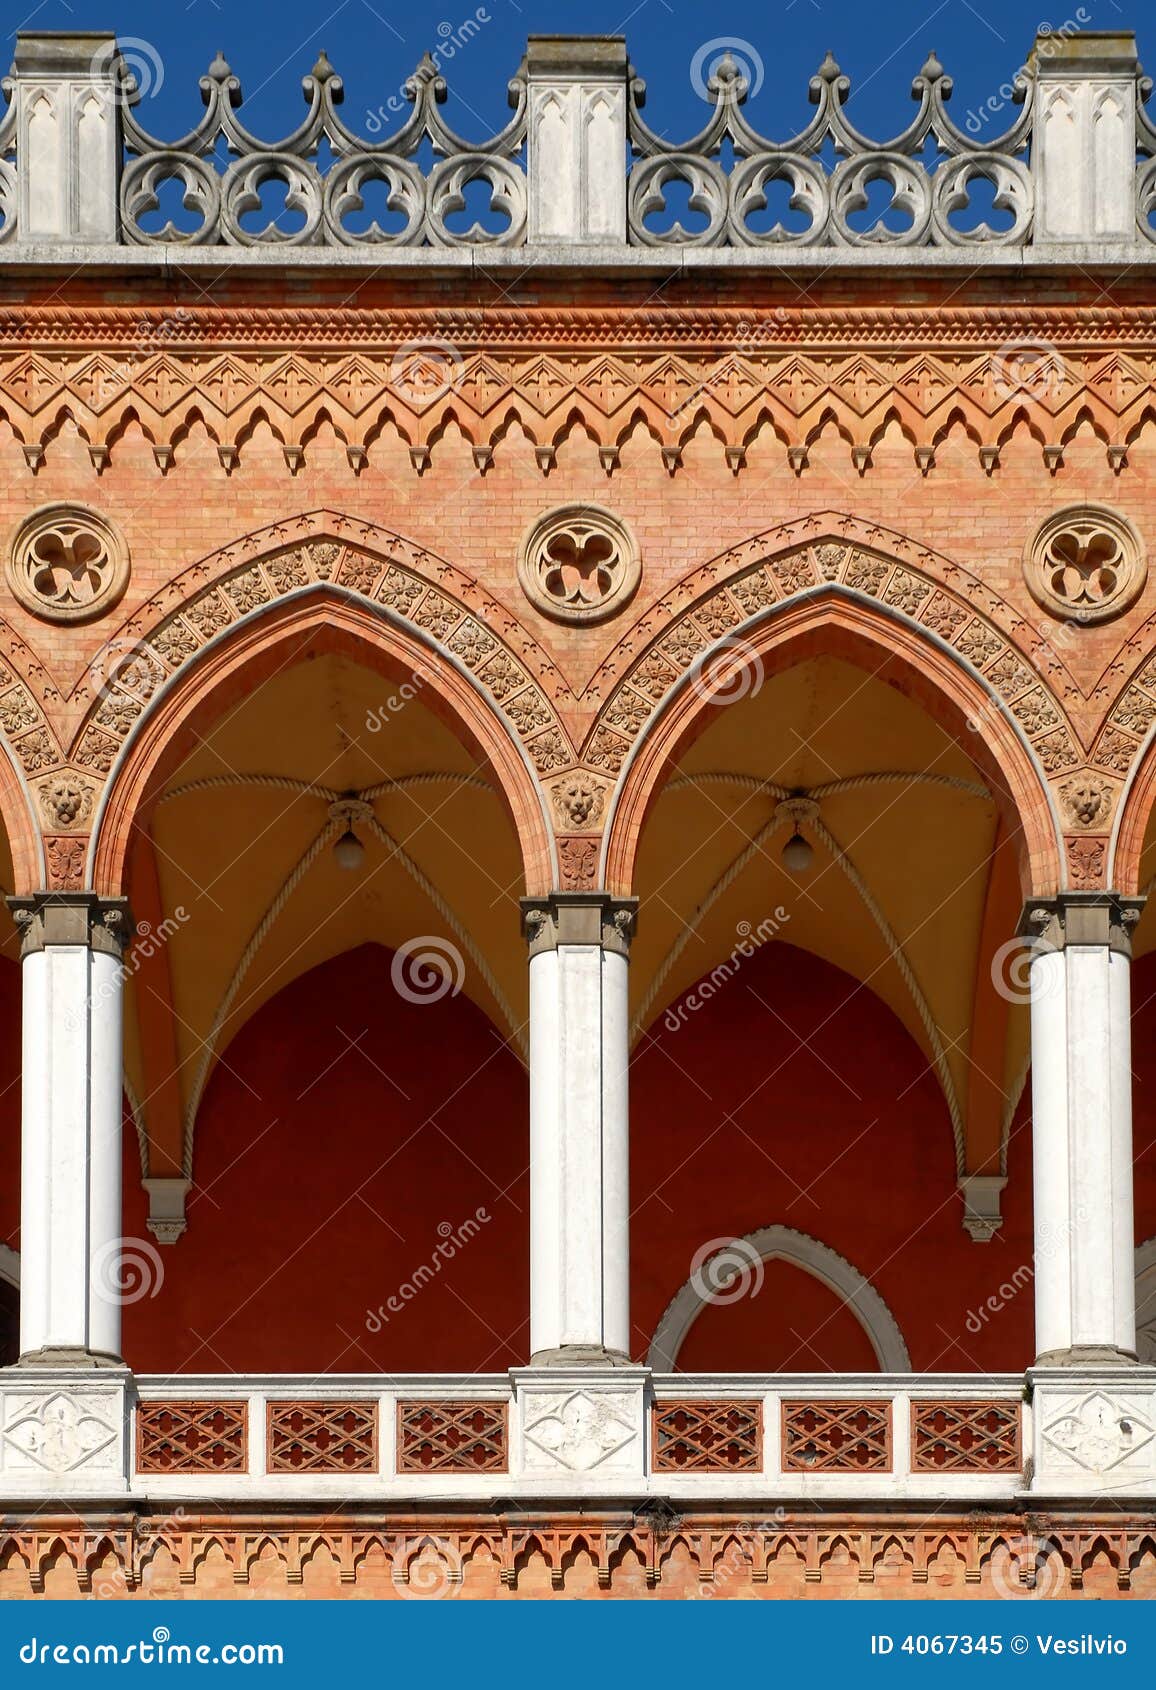 padua: venetian archway